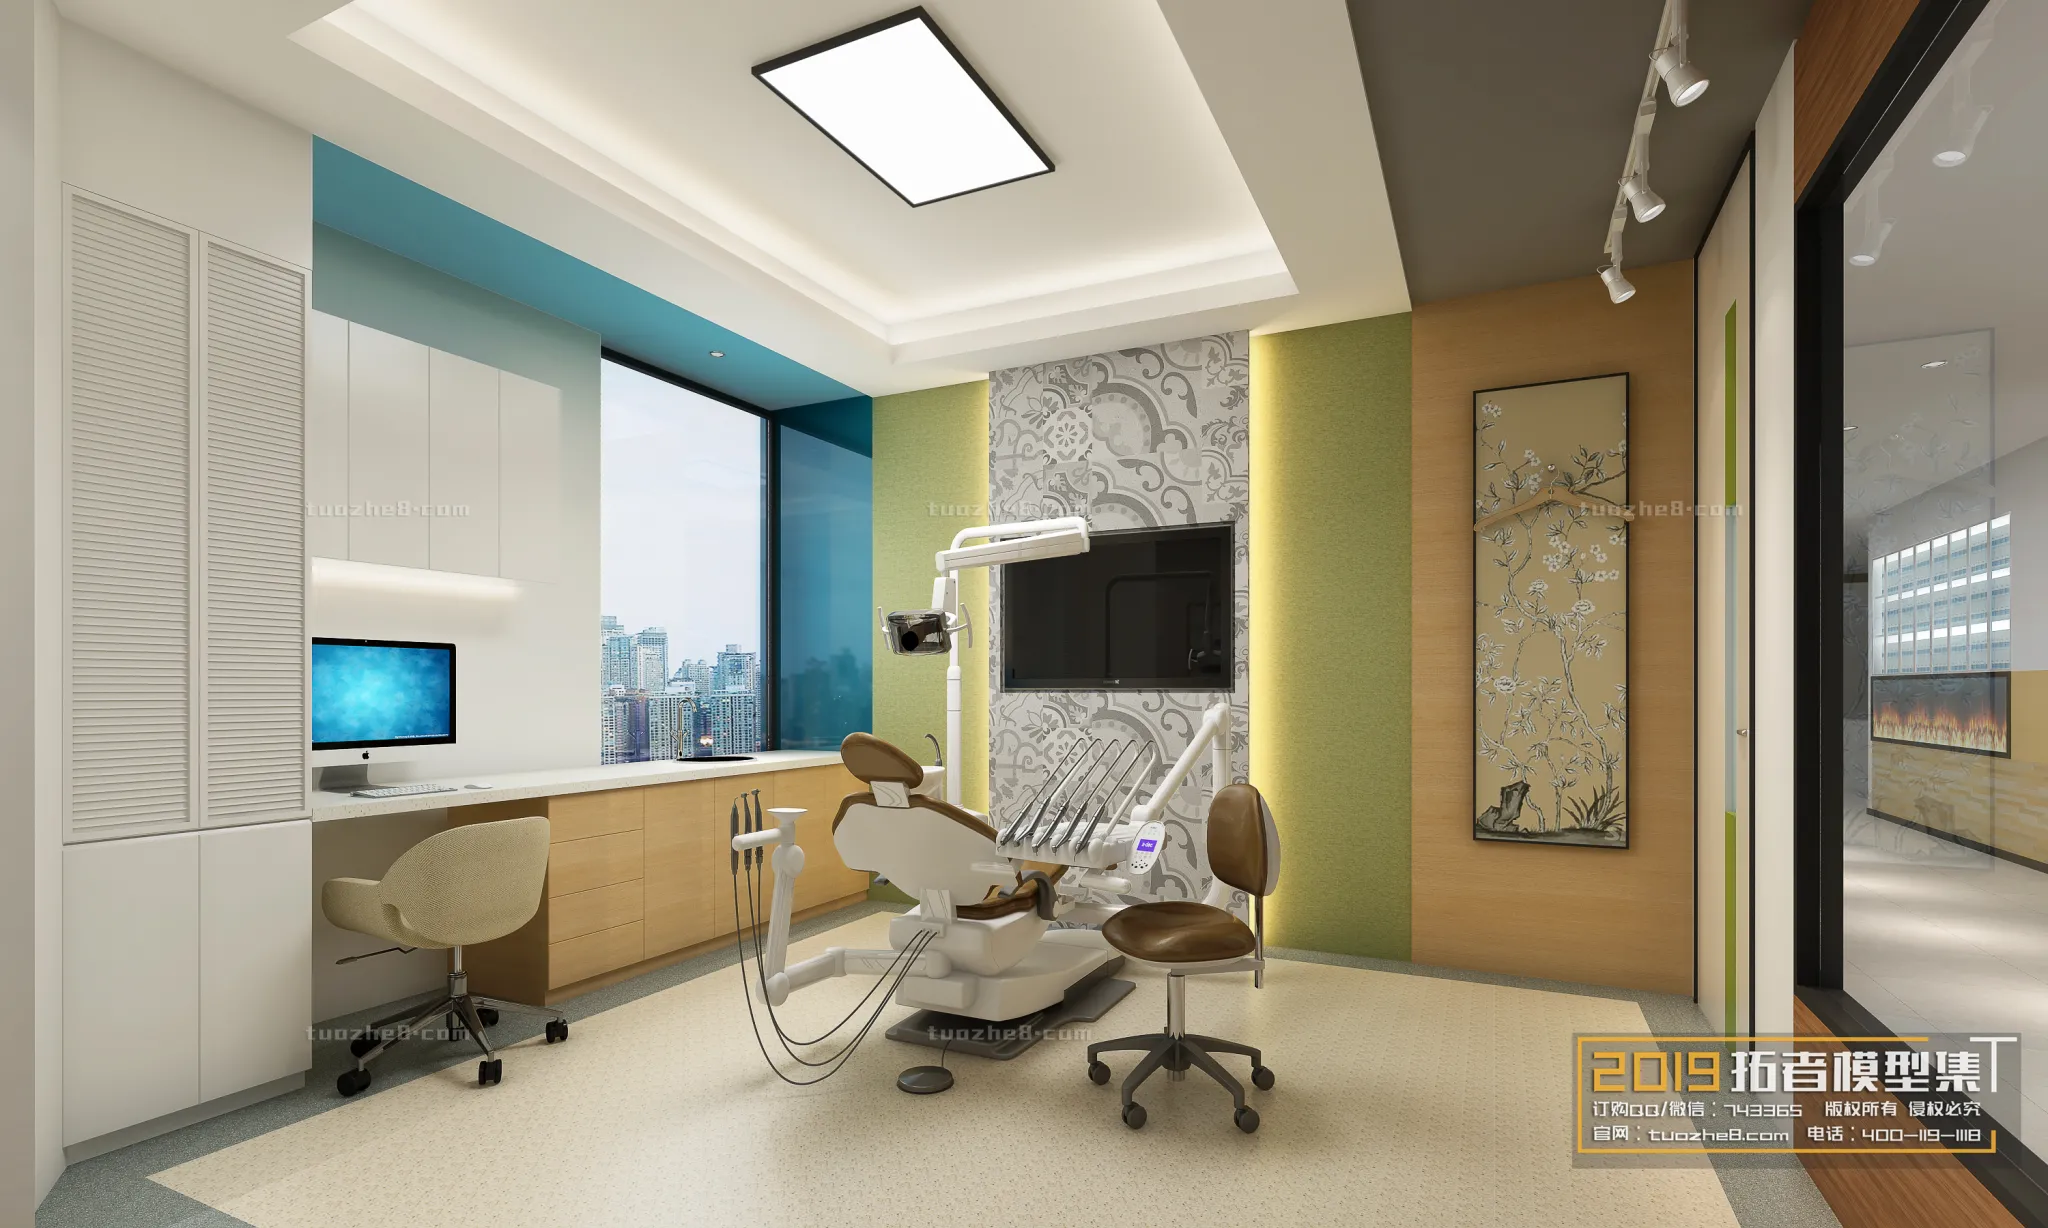 Extension Interior – HOSPITAL CLINICS – 015